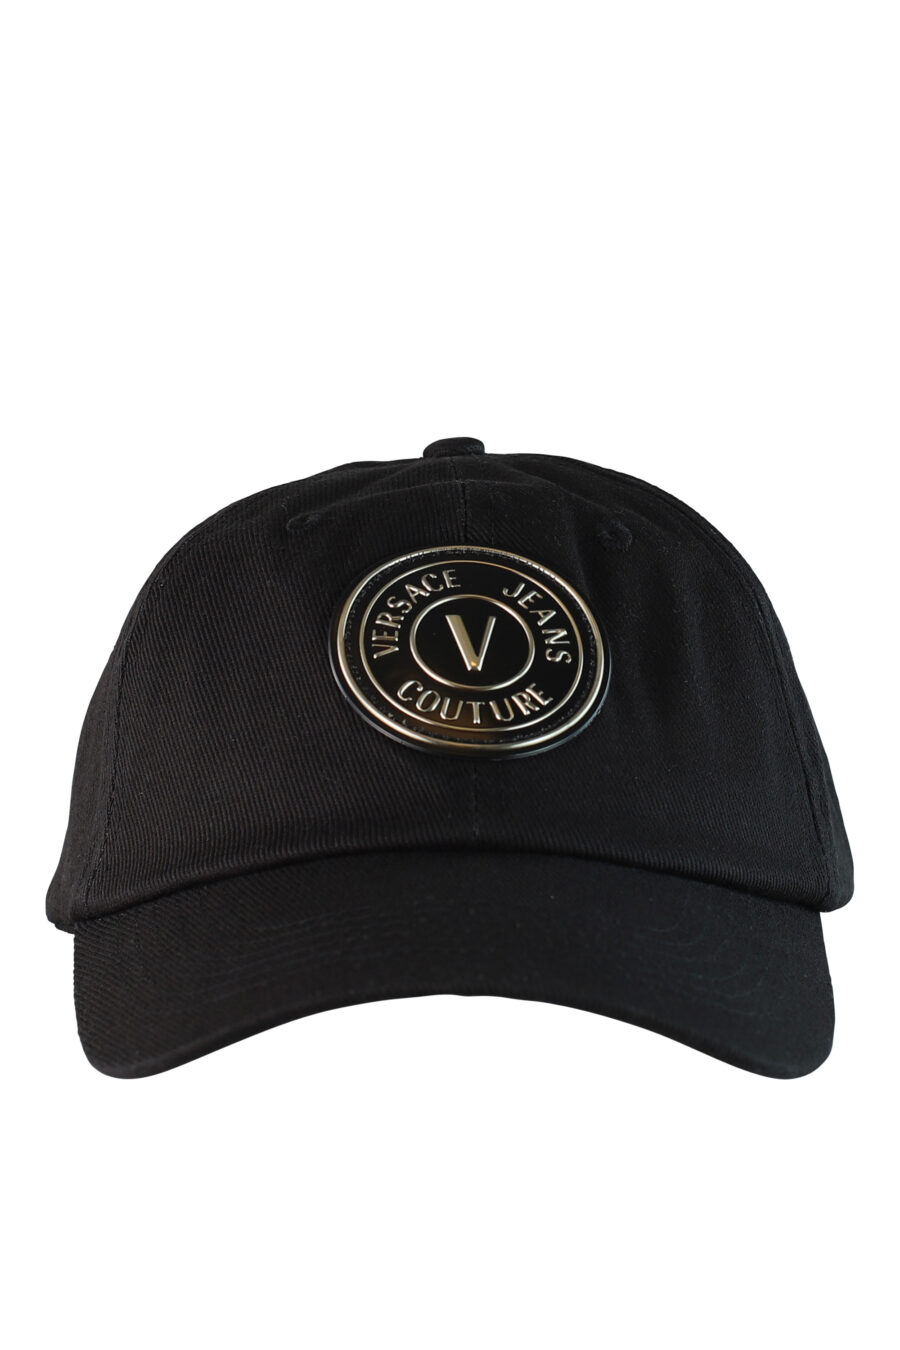 Schwarze Kappe mit kreisförmigem Logo in Gold - IMG 0502